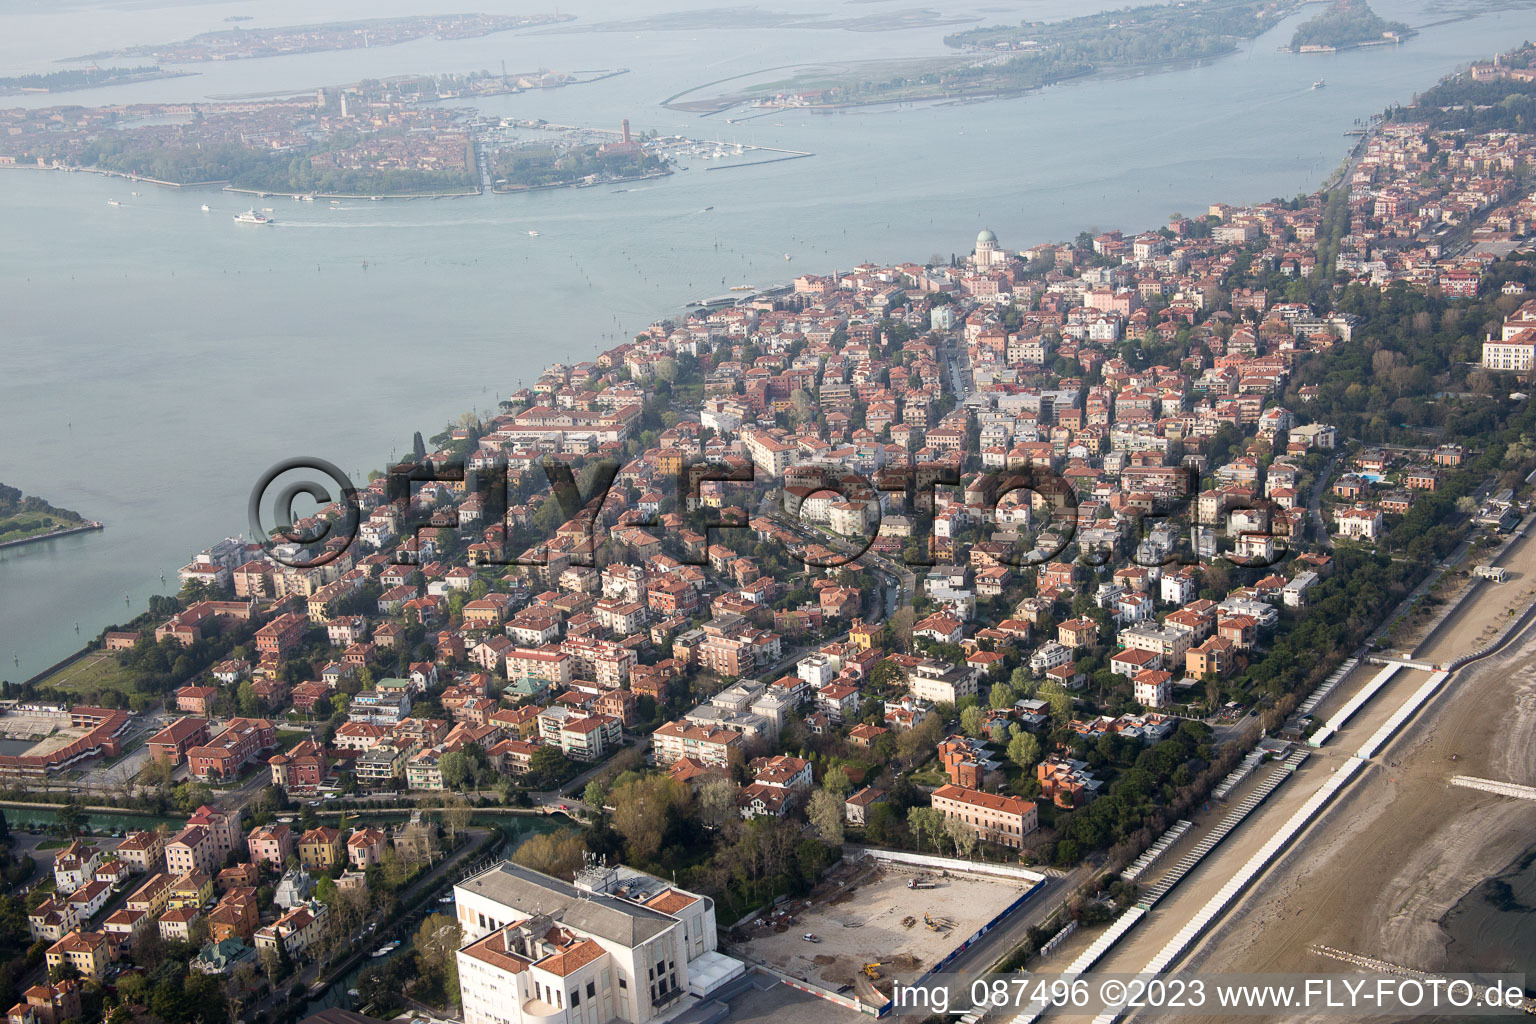 Luftbild von Città Giardino(I-Venetien) in Venezia, Italien